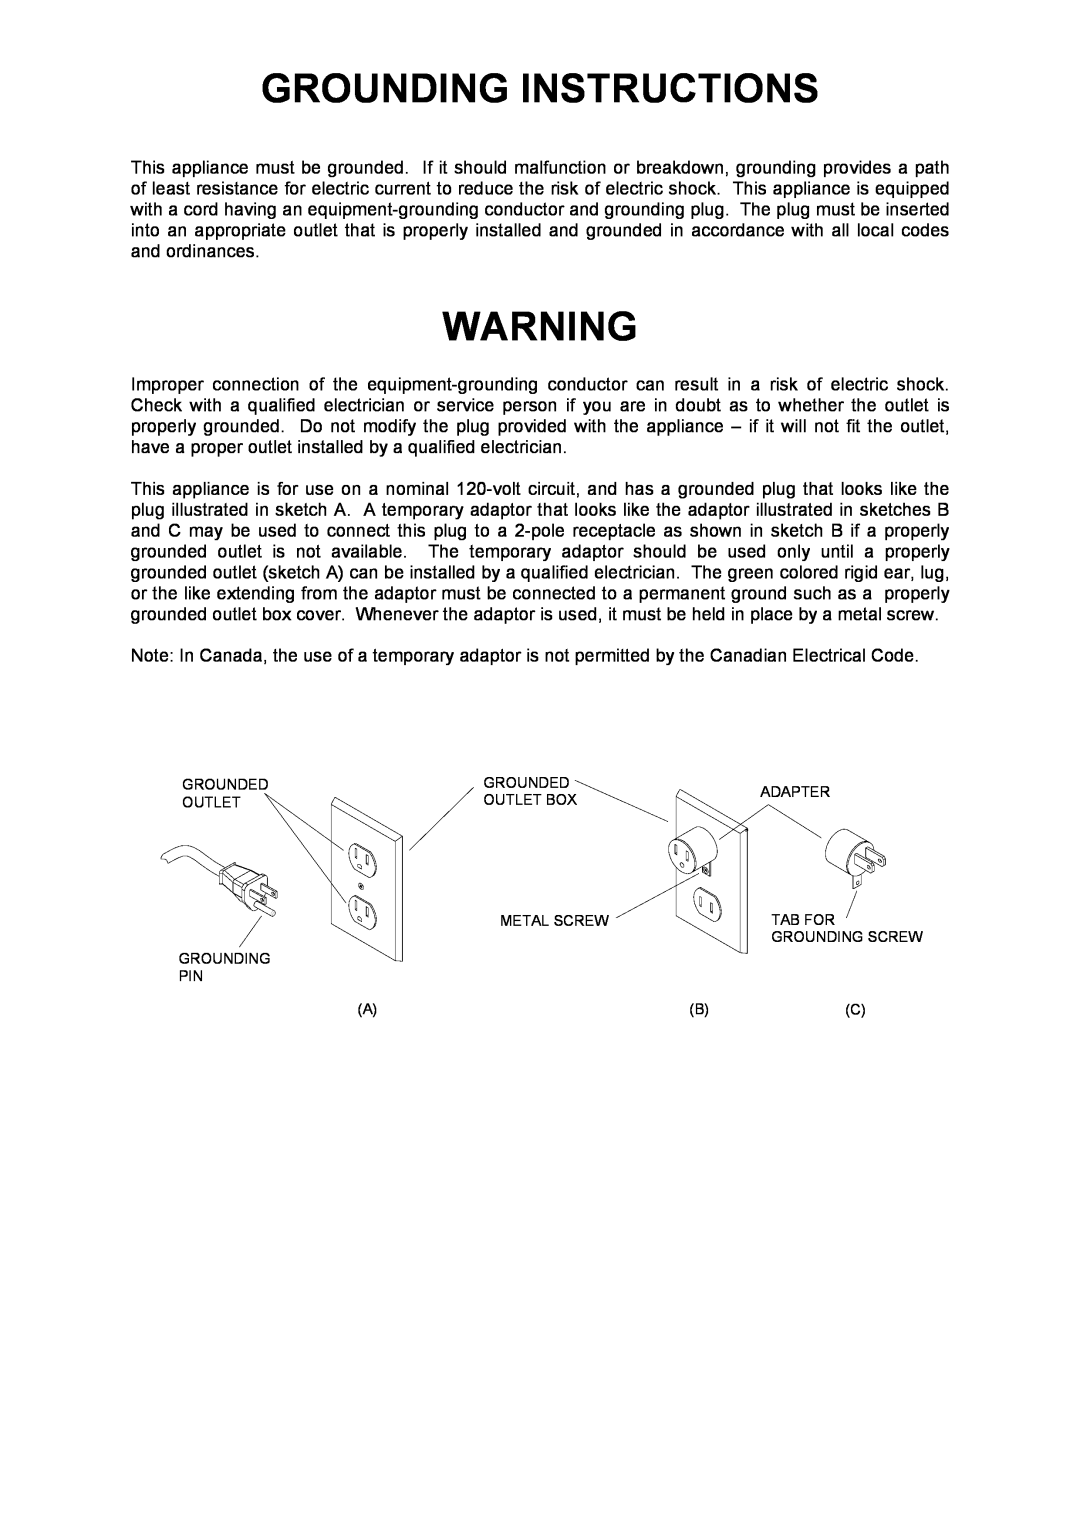 Windsor SRXP15, 10120270 manual Grounding Instructions, Grounded Outlet Grounding Pin A, Grounded Outlet Box Metal Screw 